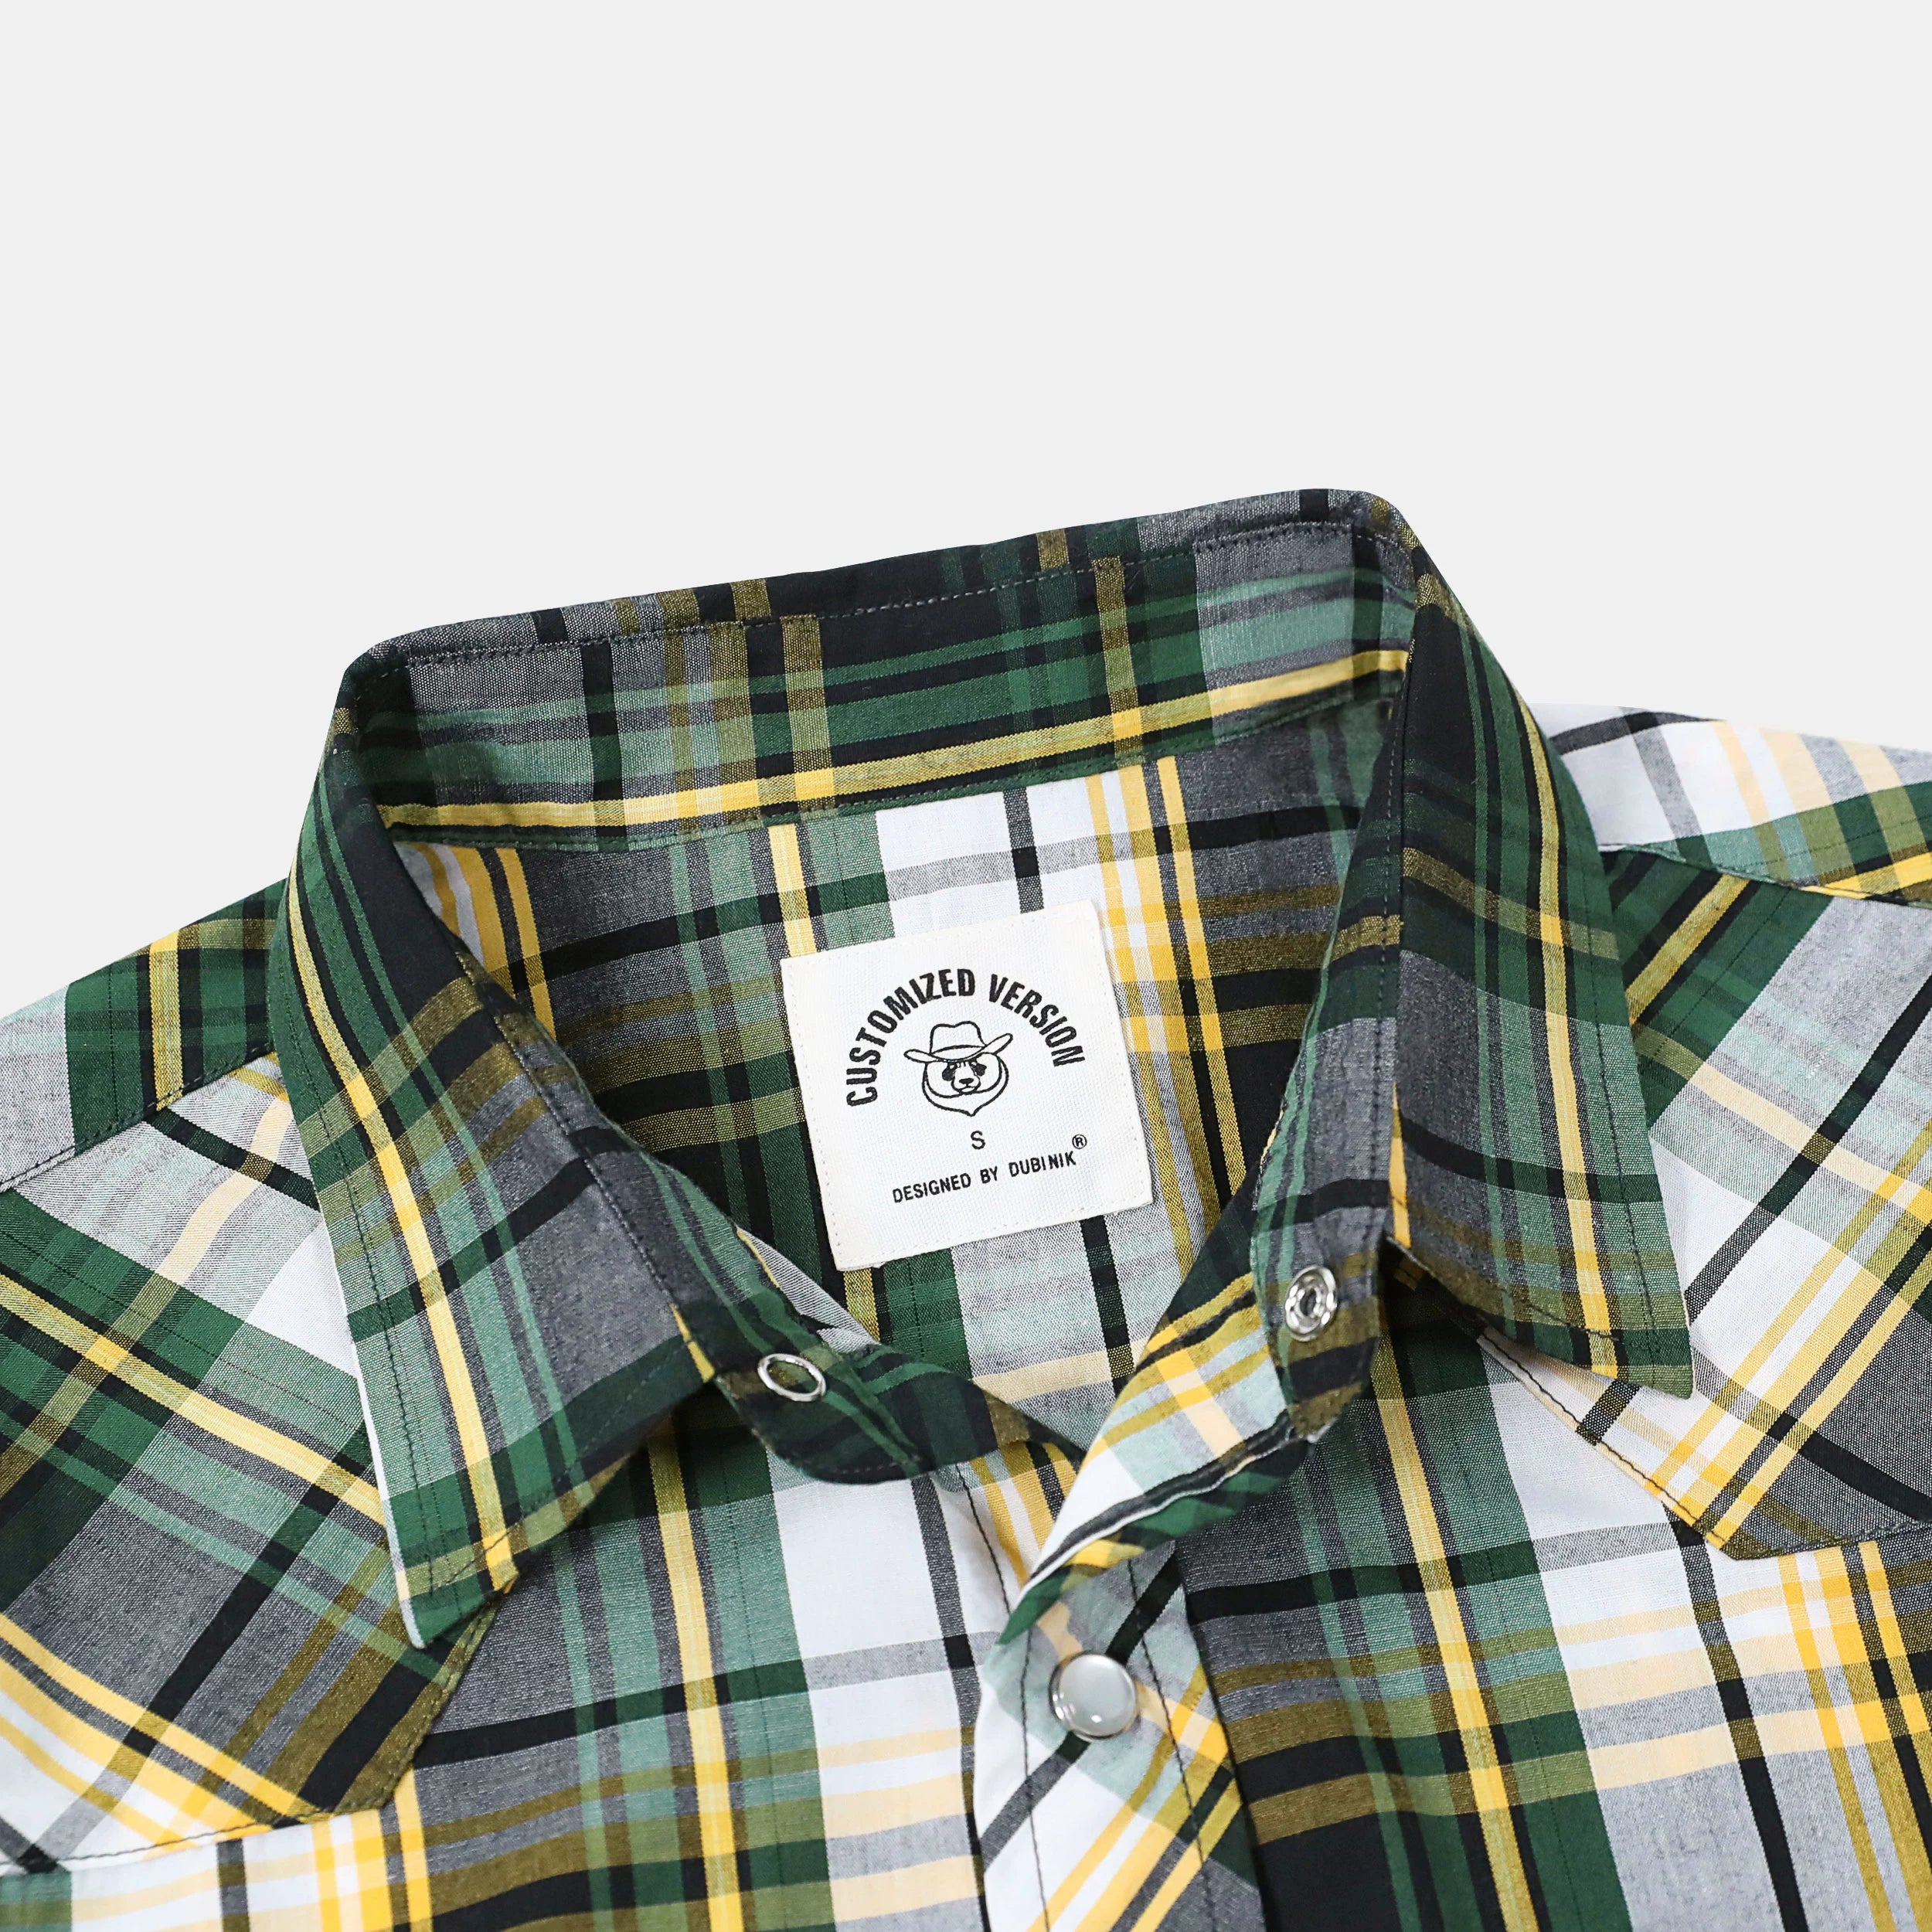 Dubinik® Western Shirts for Men Short Sleeve Plaid Pearl Snap Shirts for Men Button Up Shirt Cowboy Casual Work Shirt#41004